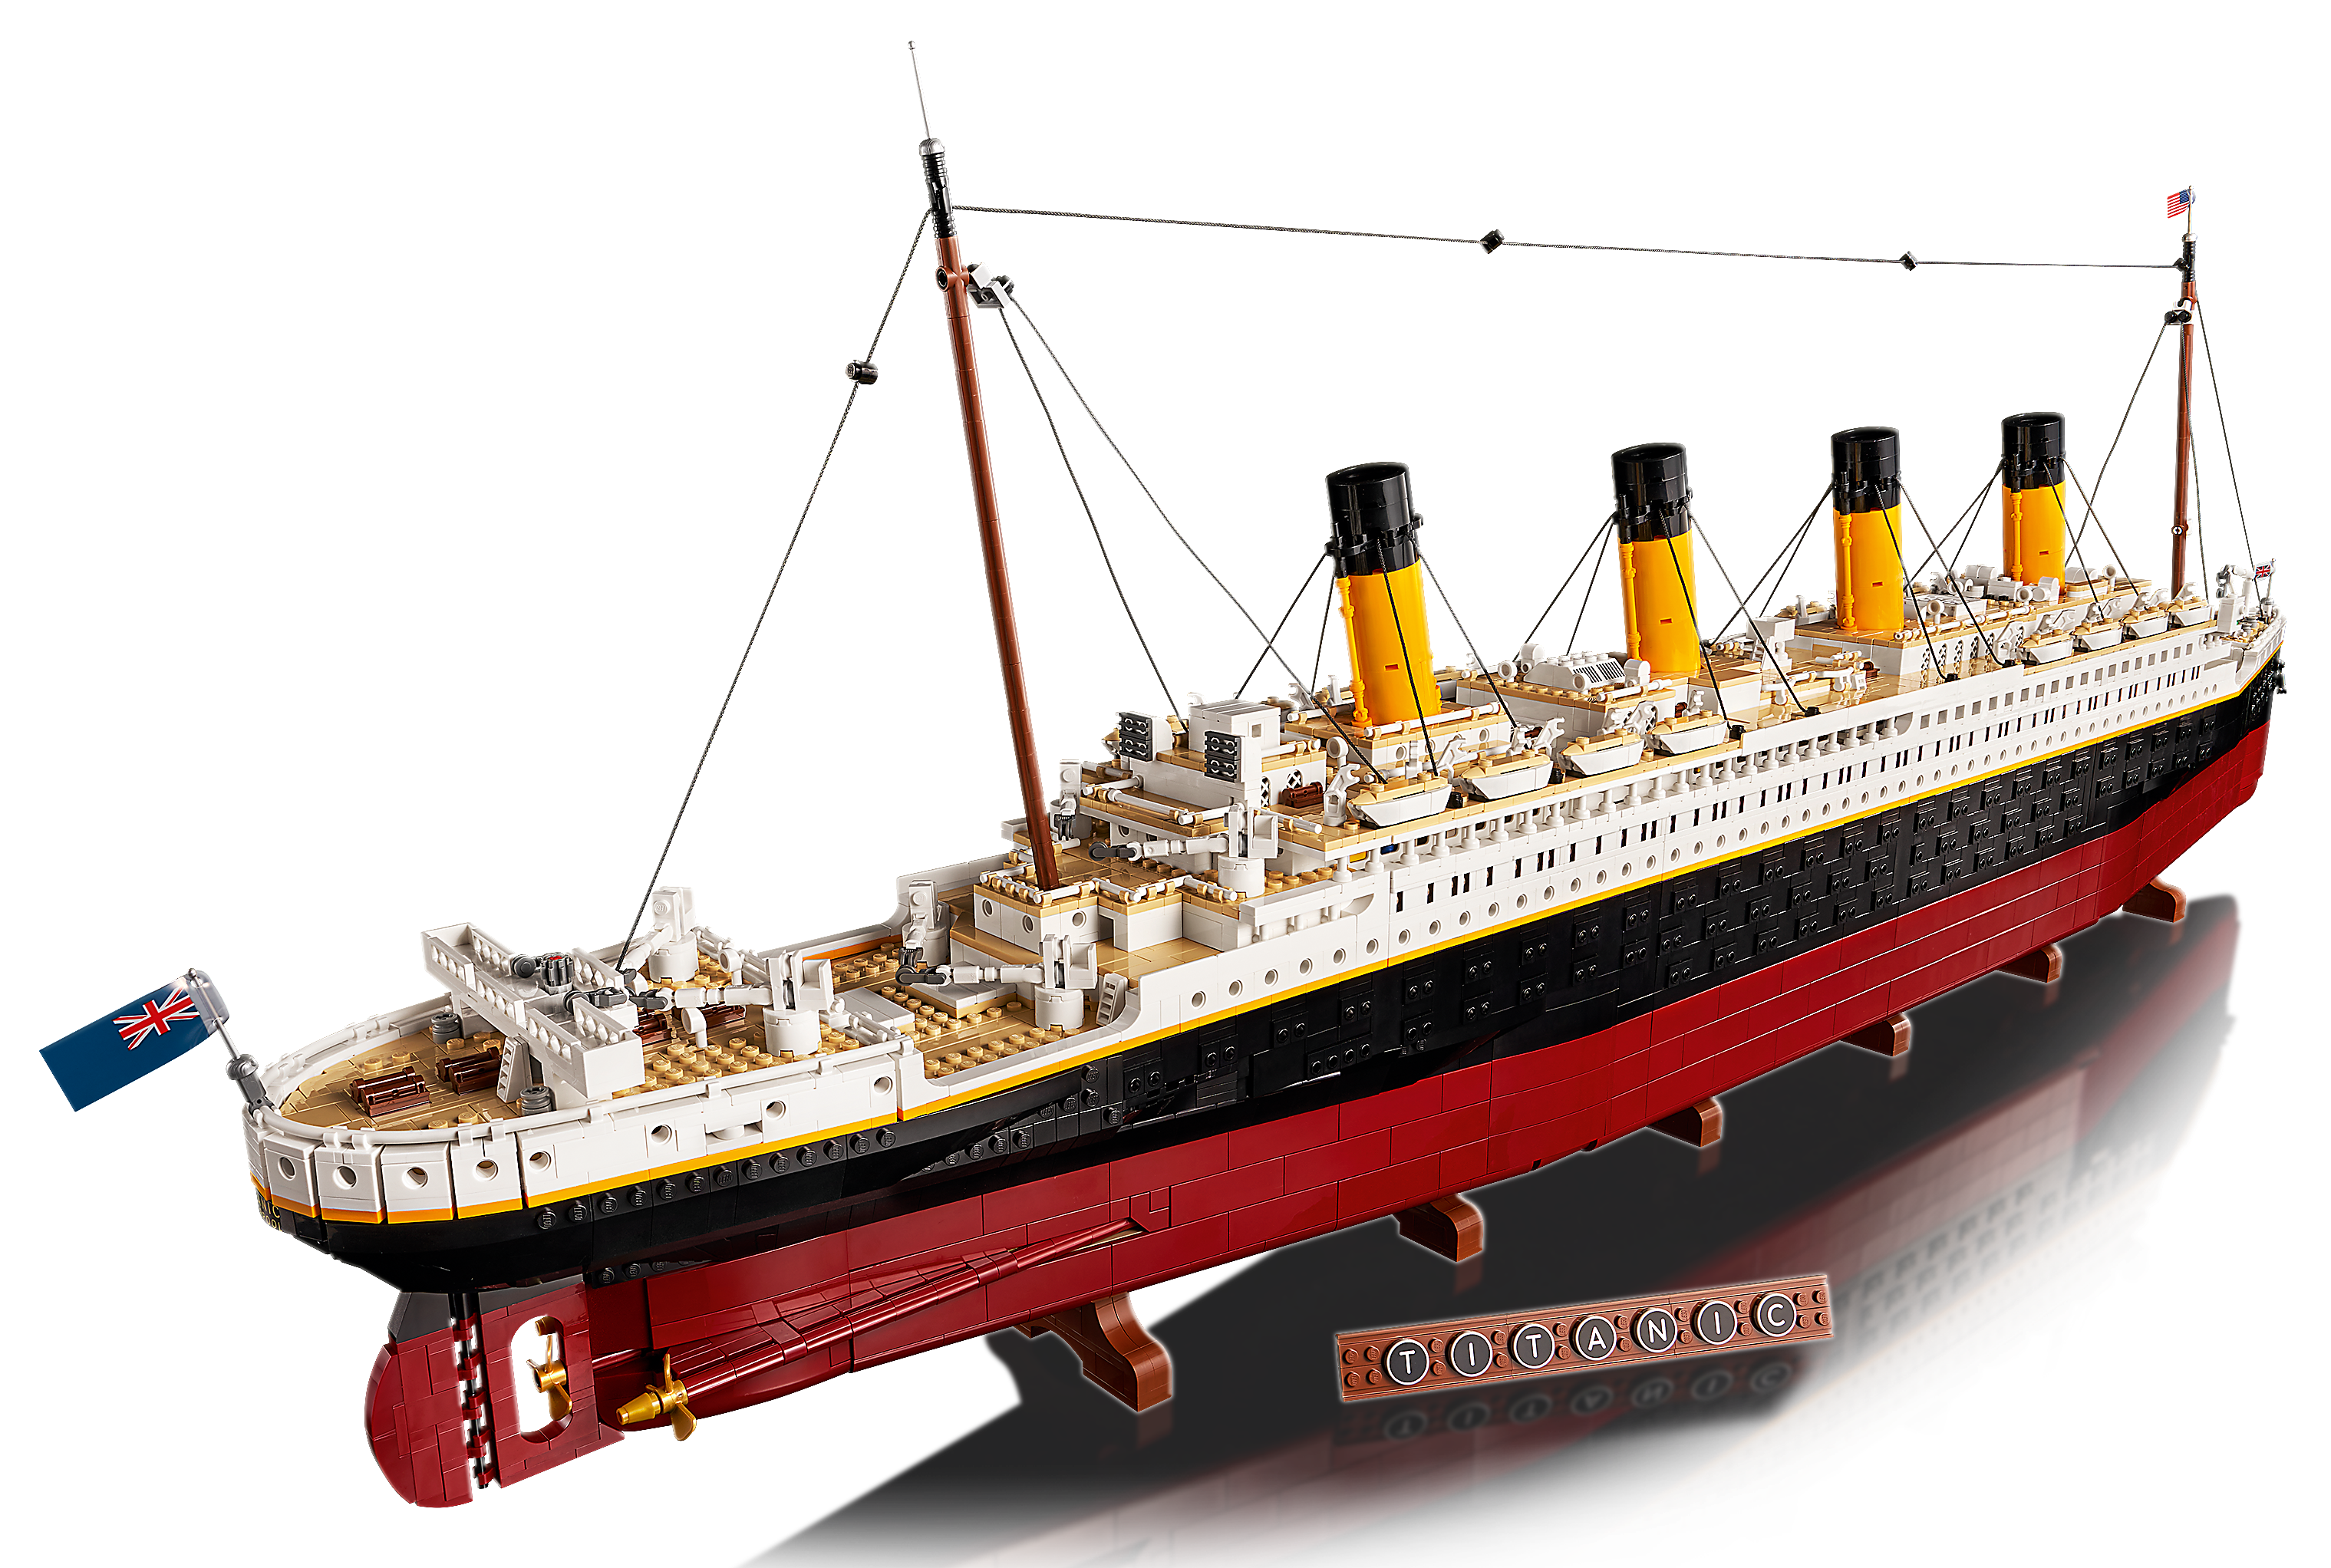 LEGO® Titanic 10294 | LEGO® Icons | Virallinen LEGO®-kaupasta FI